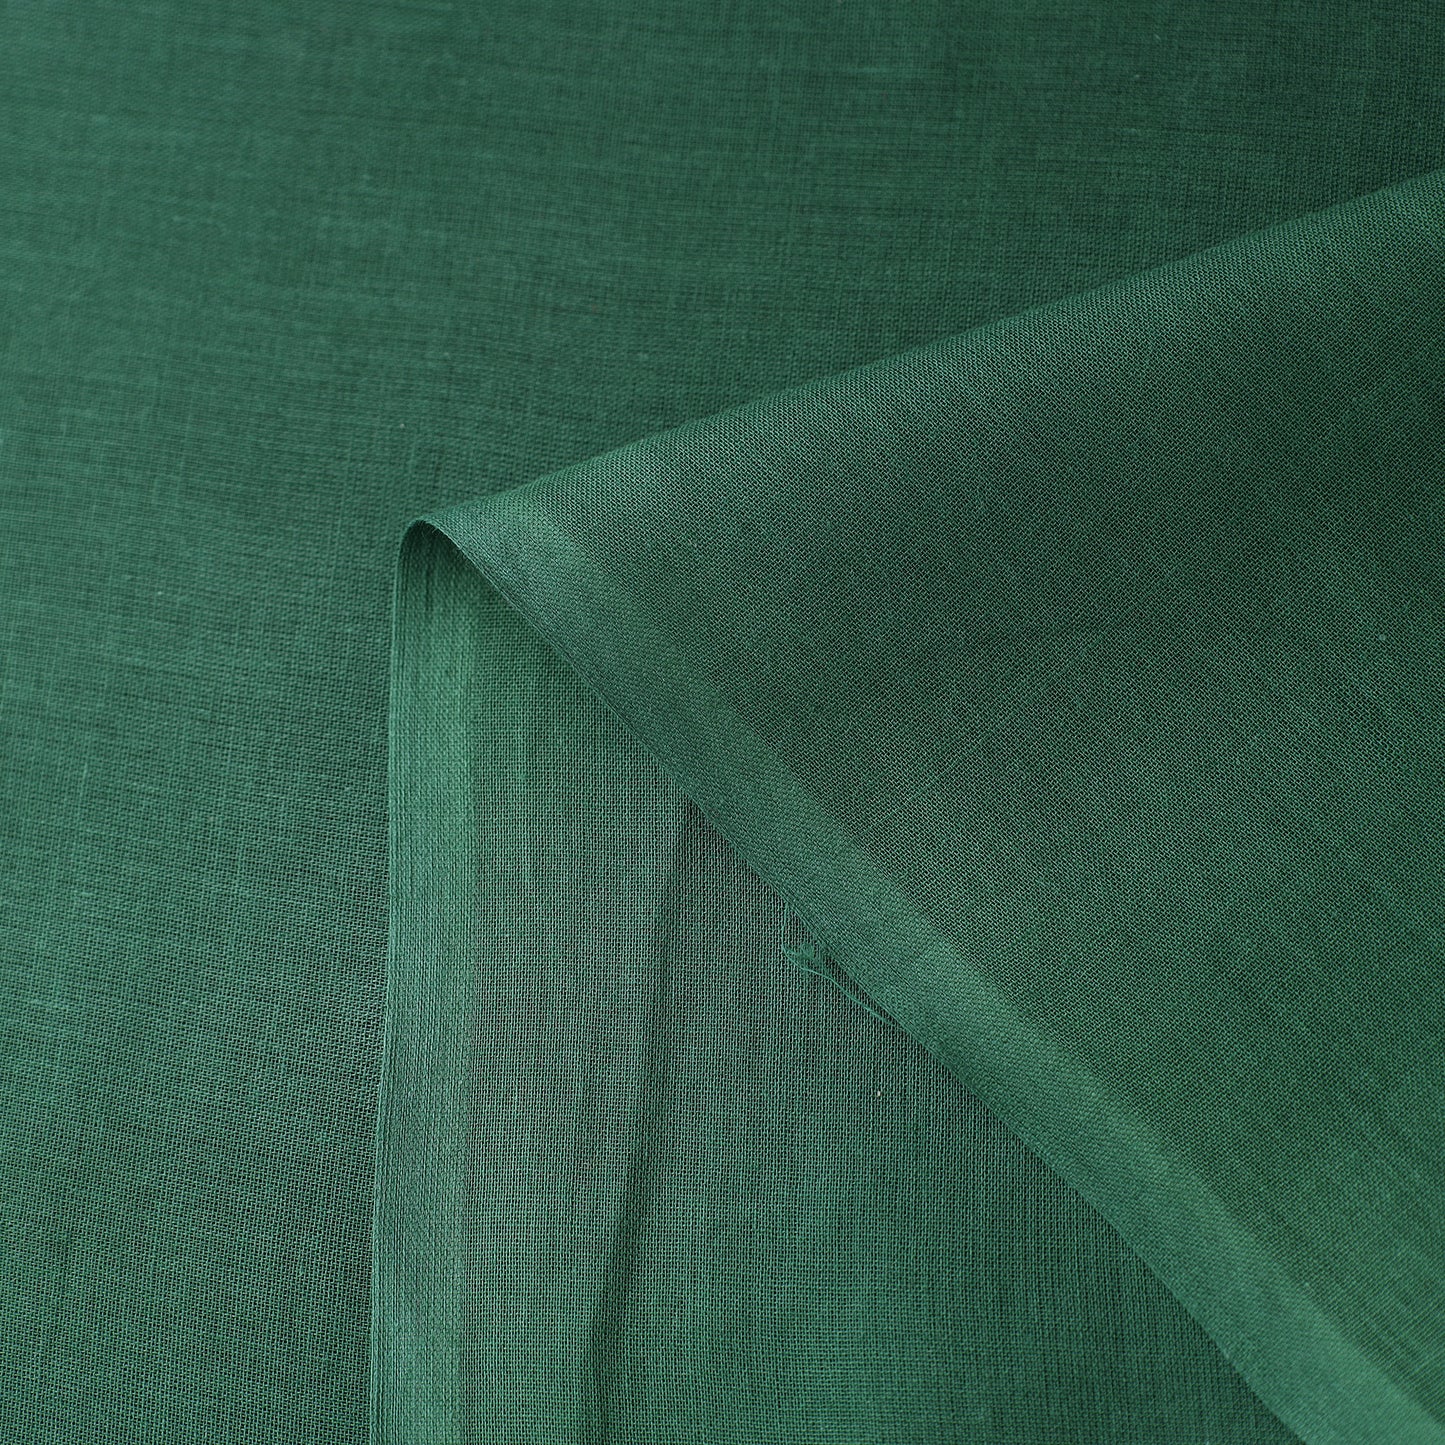 Green - Prewashed Plain Dyed Cotton Fabric 03